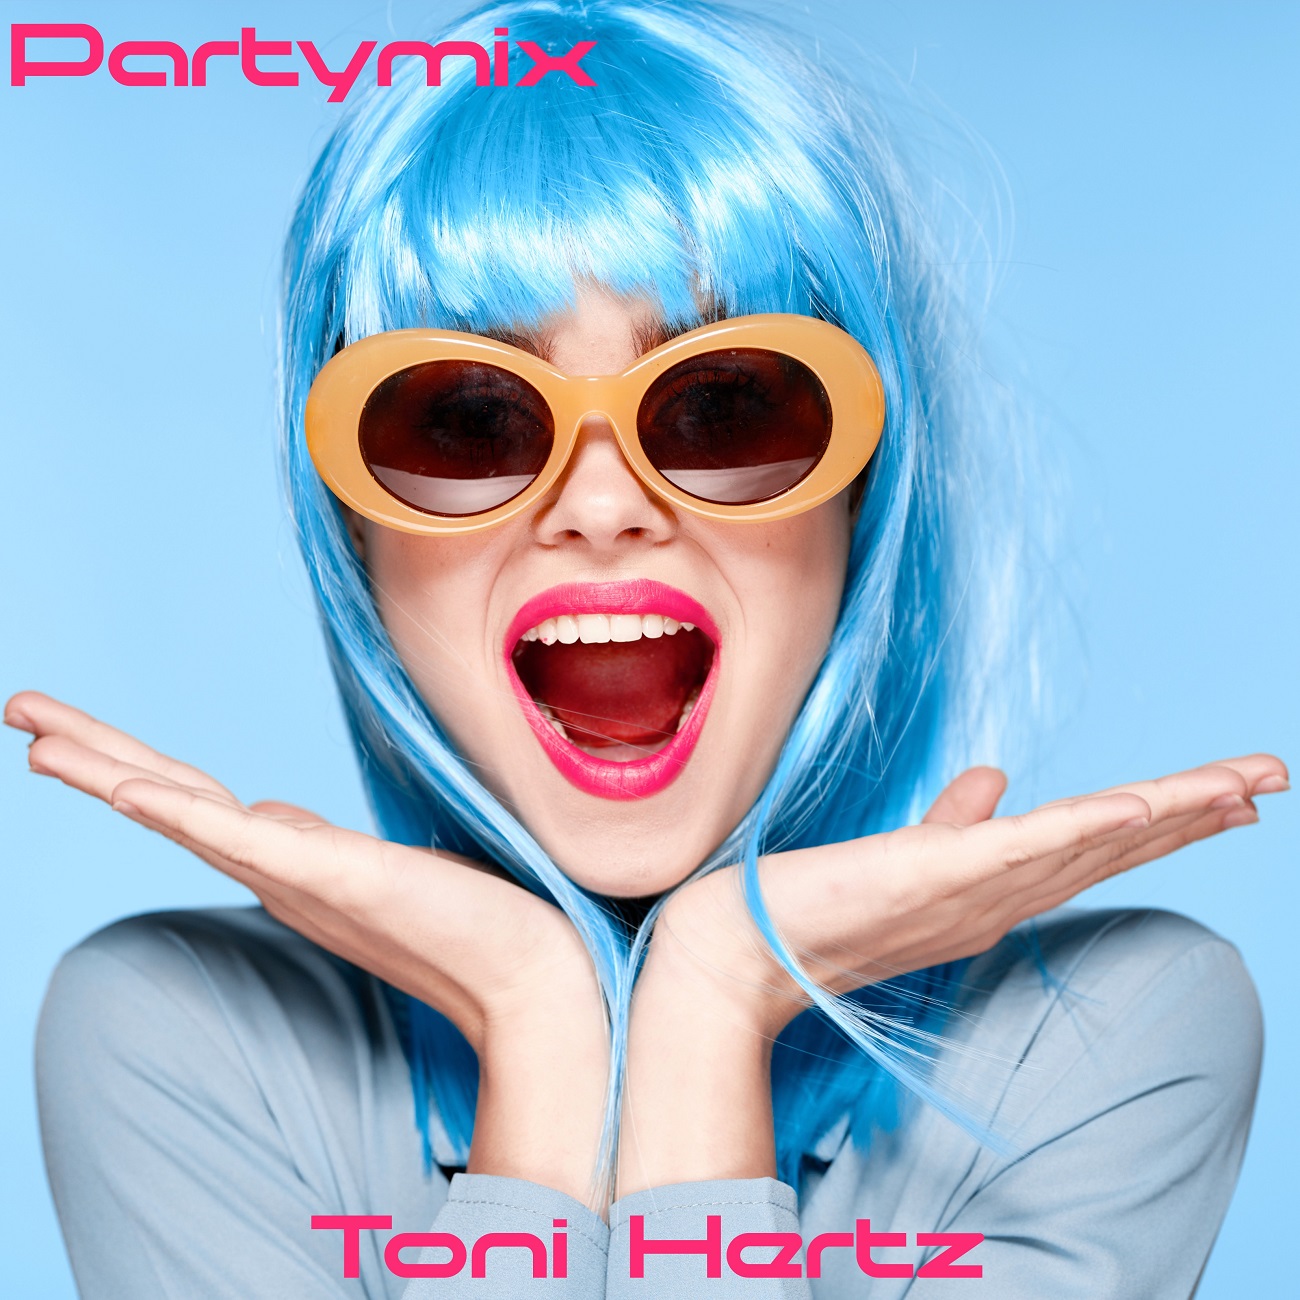 ToniHertz-Partymix-Cover.jpg